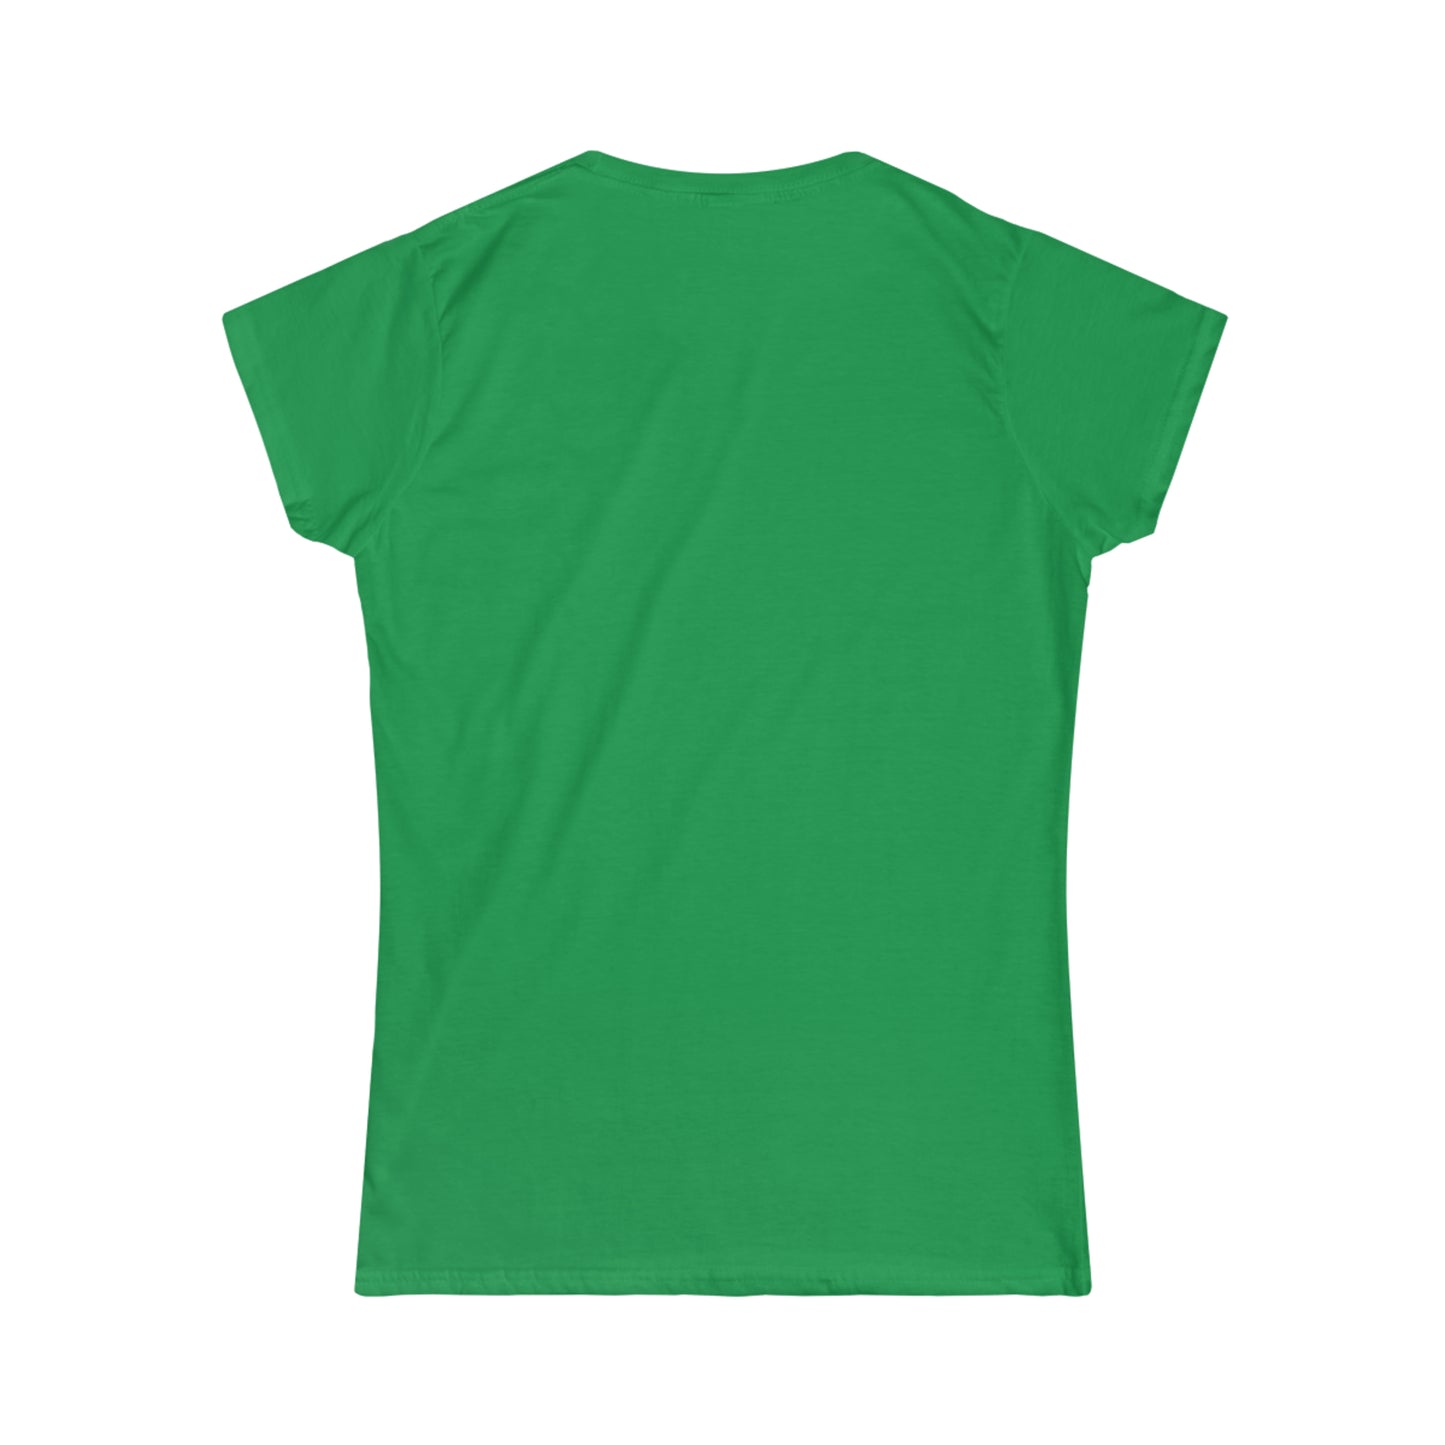 Aqui hay tomate - Camiseta de mujer - Women's Softstyle Tee